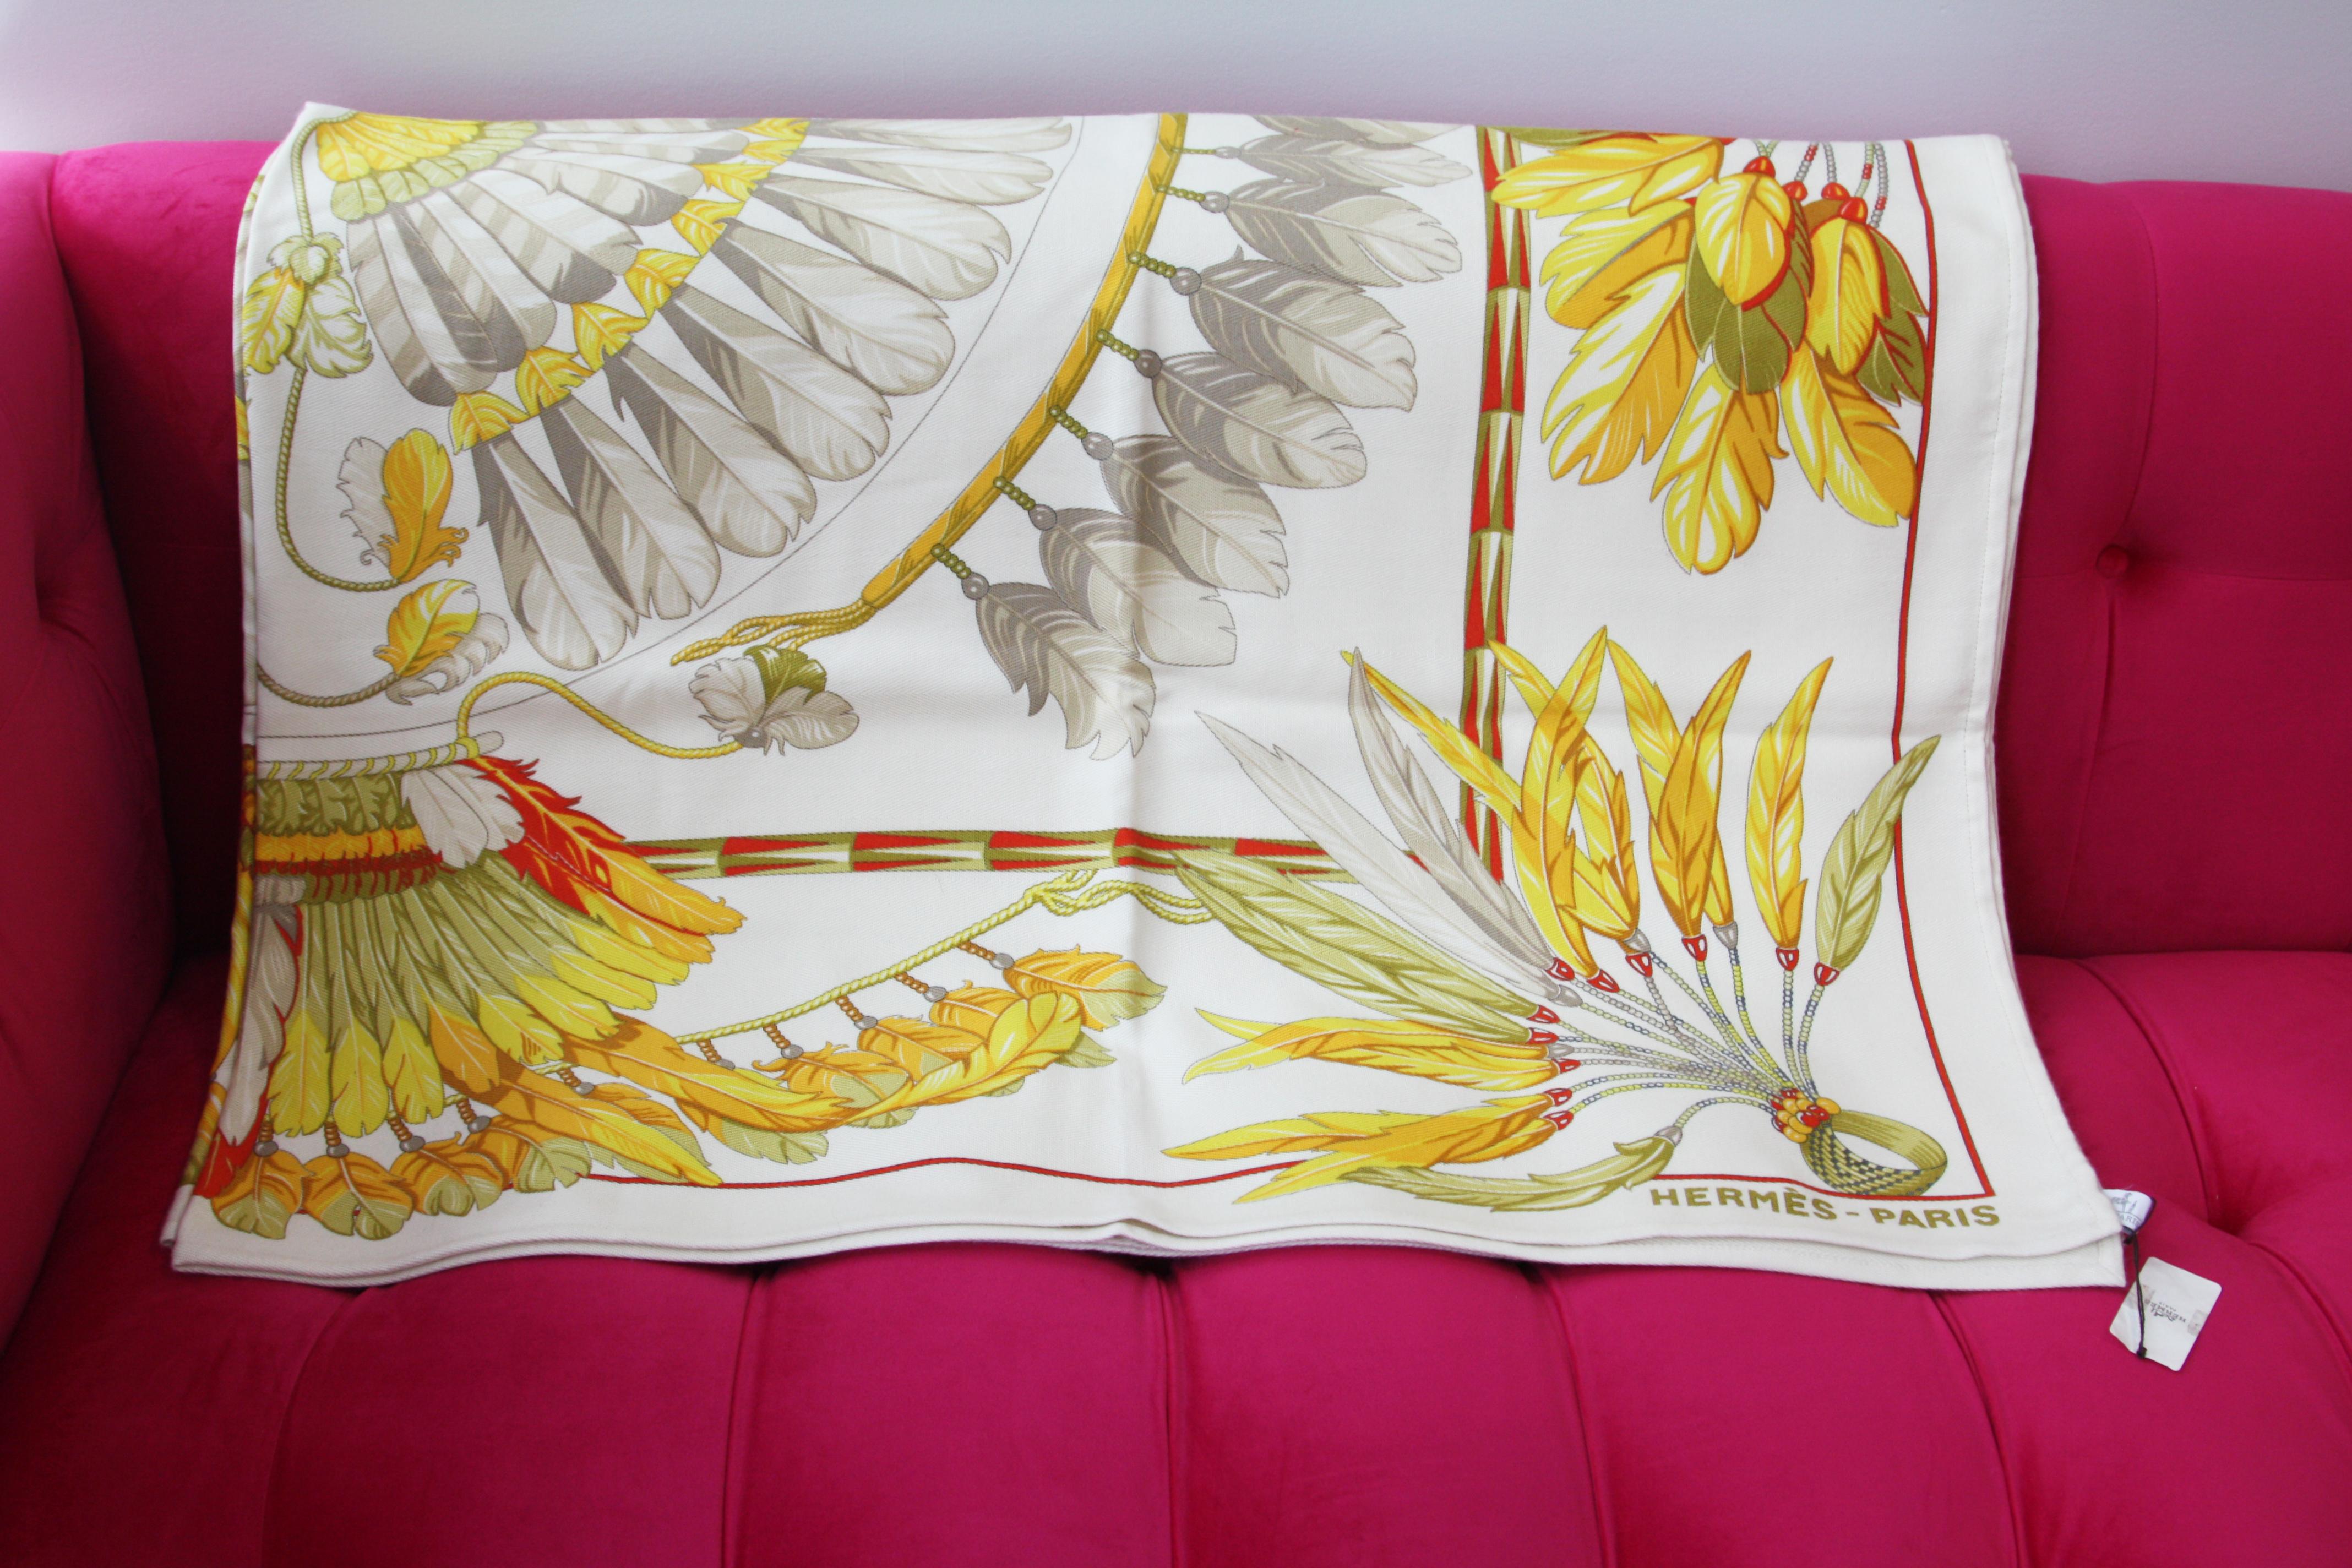 Hermes Blanket (70% Cashmere, 30% Silk)

Measures: 140 x 190 cm

New 